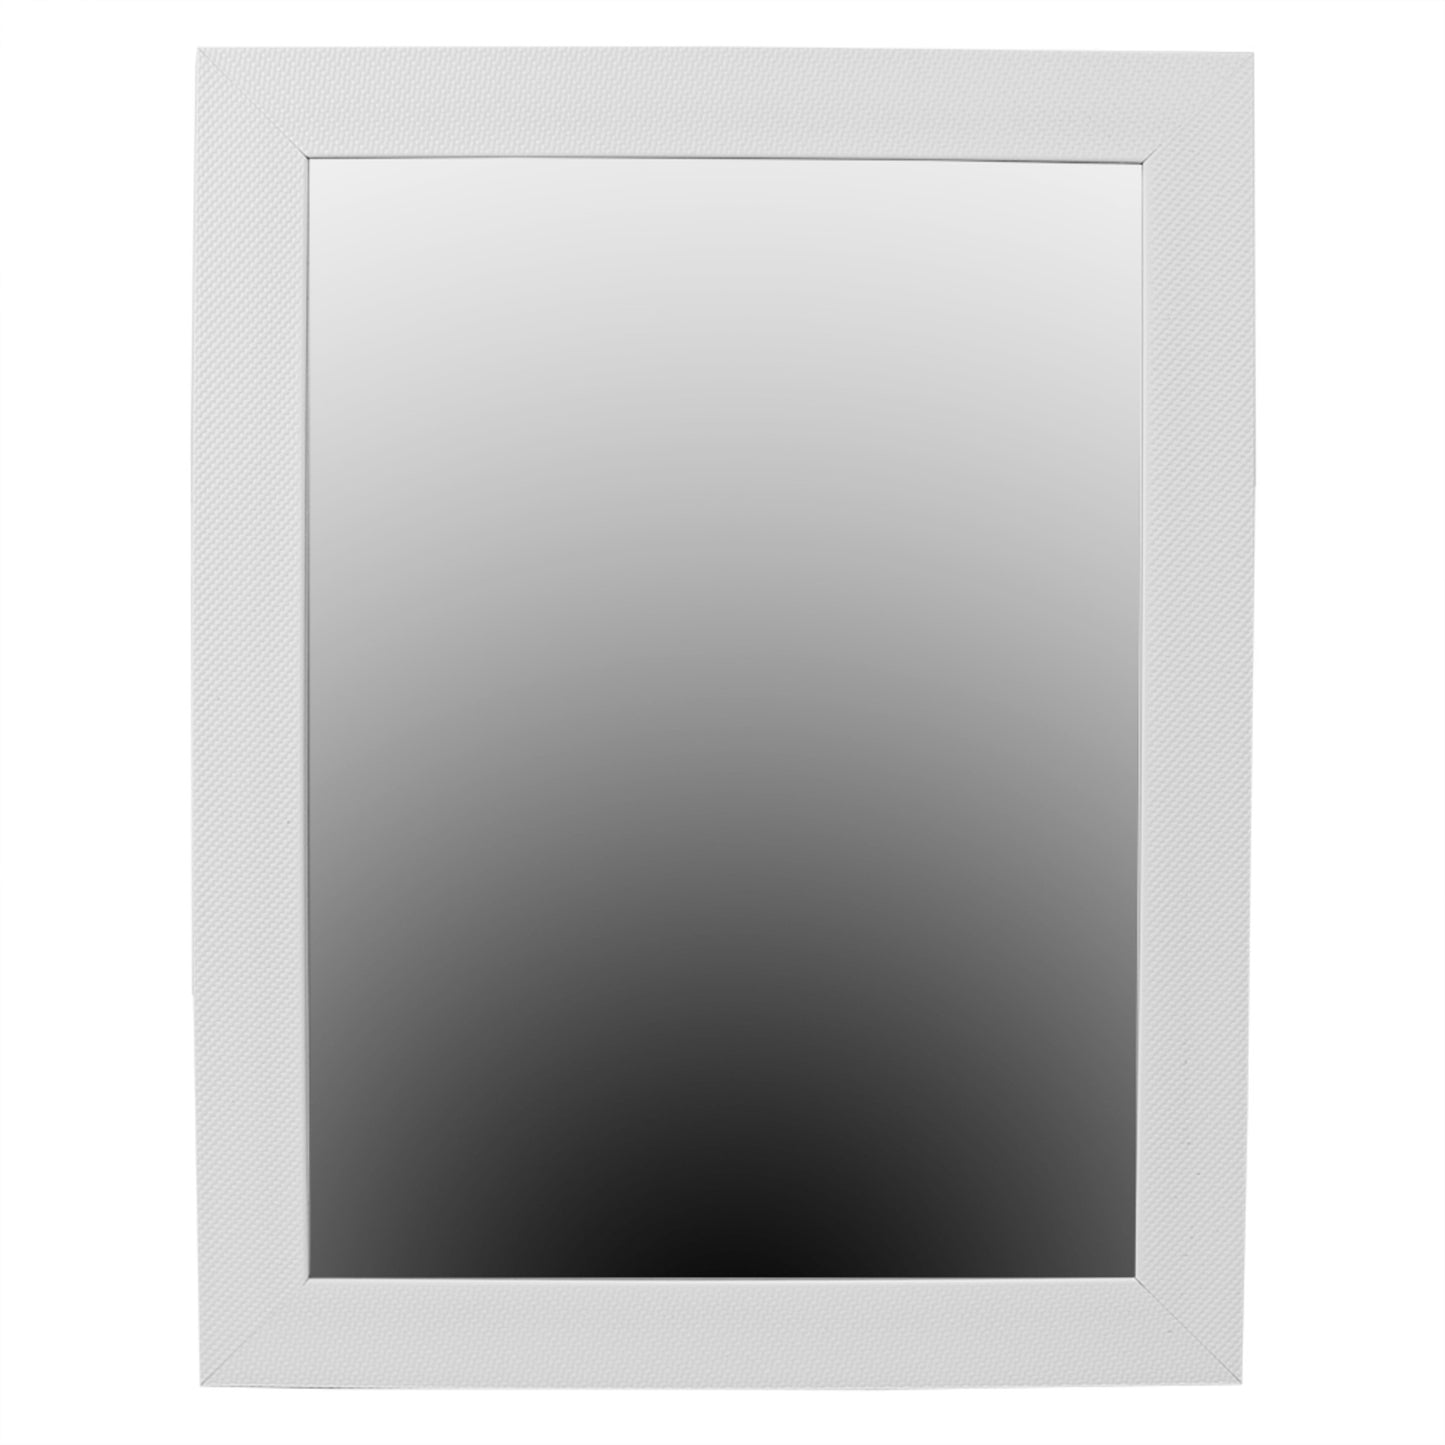 Home Basics Wall Mirror, White - White